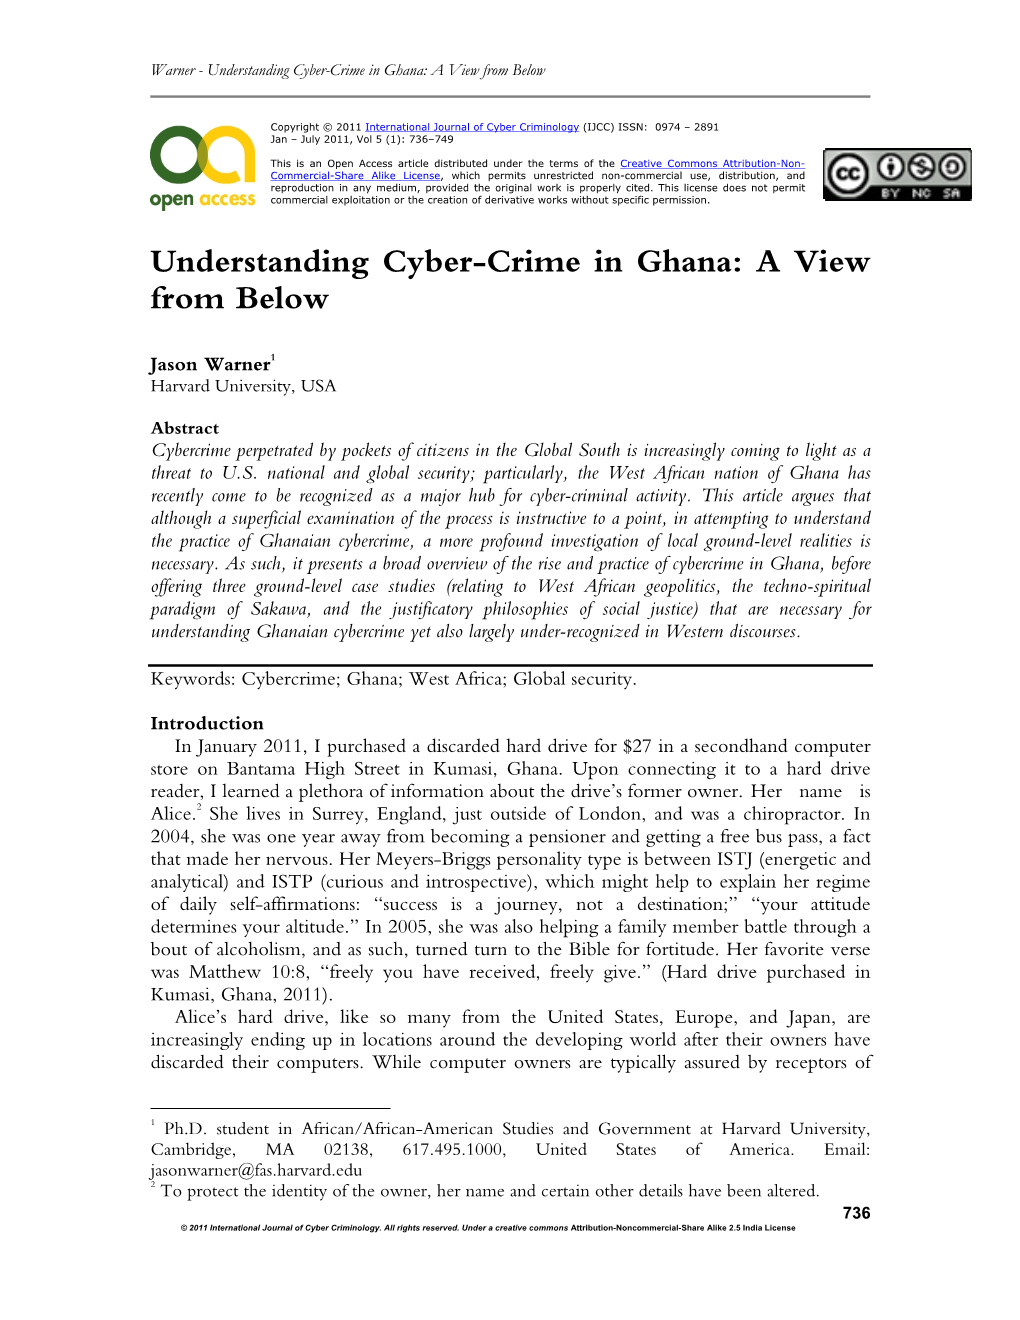 Understanding Cyber-Crime in Ghana: a View from Below